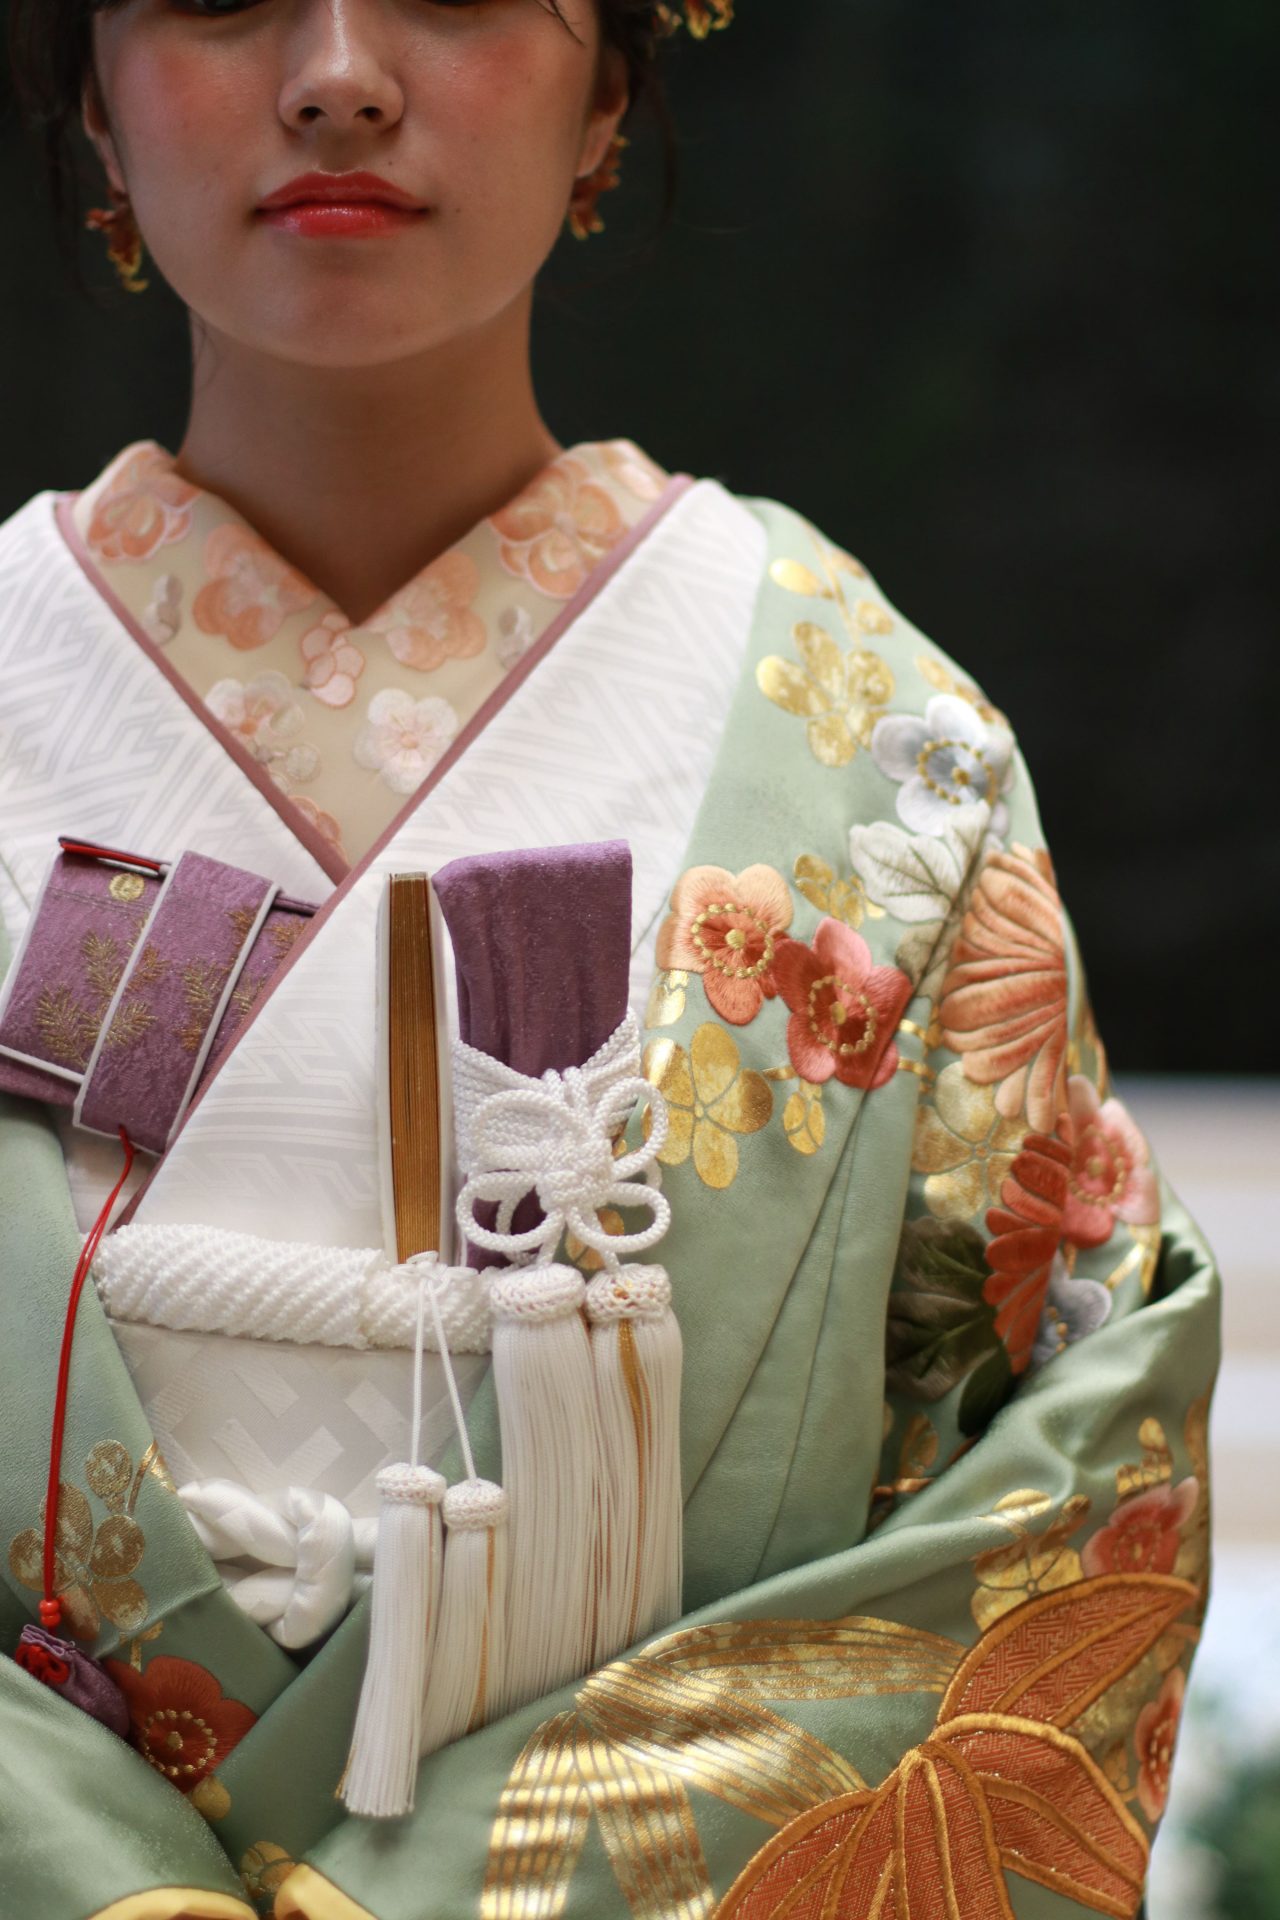 THE TREAT DRESSINGがTHE KAWABUN NAGOYAでお式や前撮りをされる花嫁様におすすめをする色打掛のコーディネート